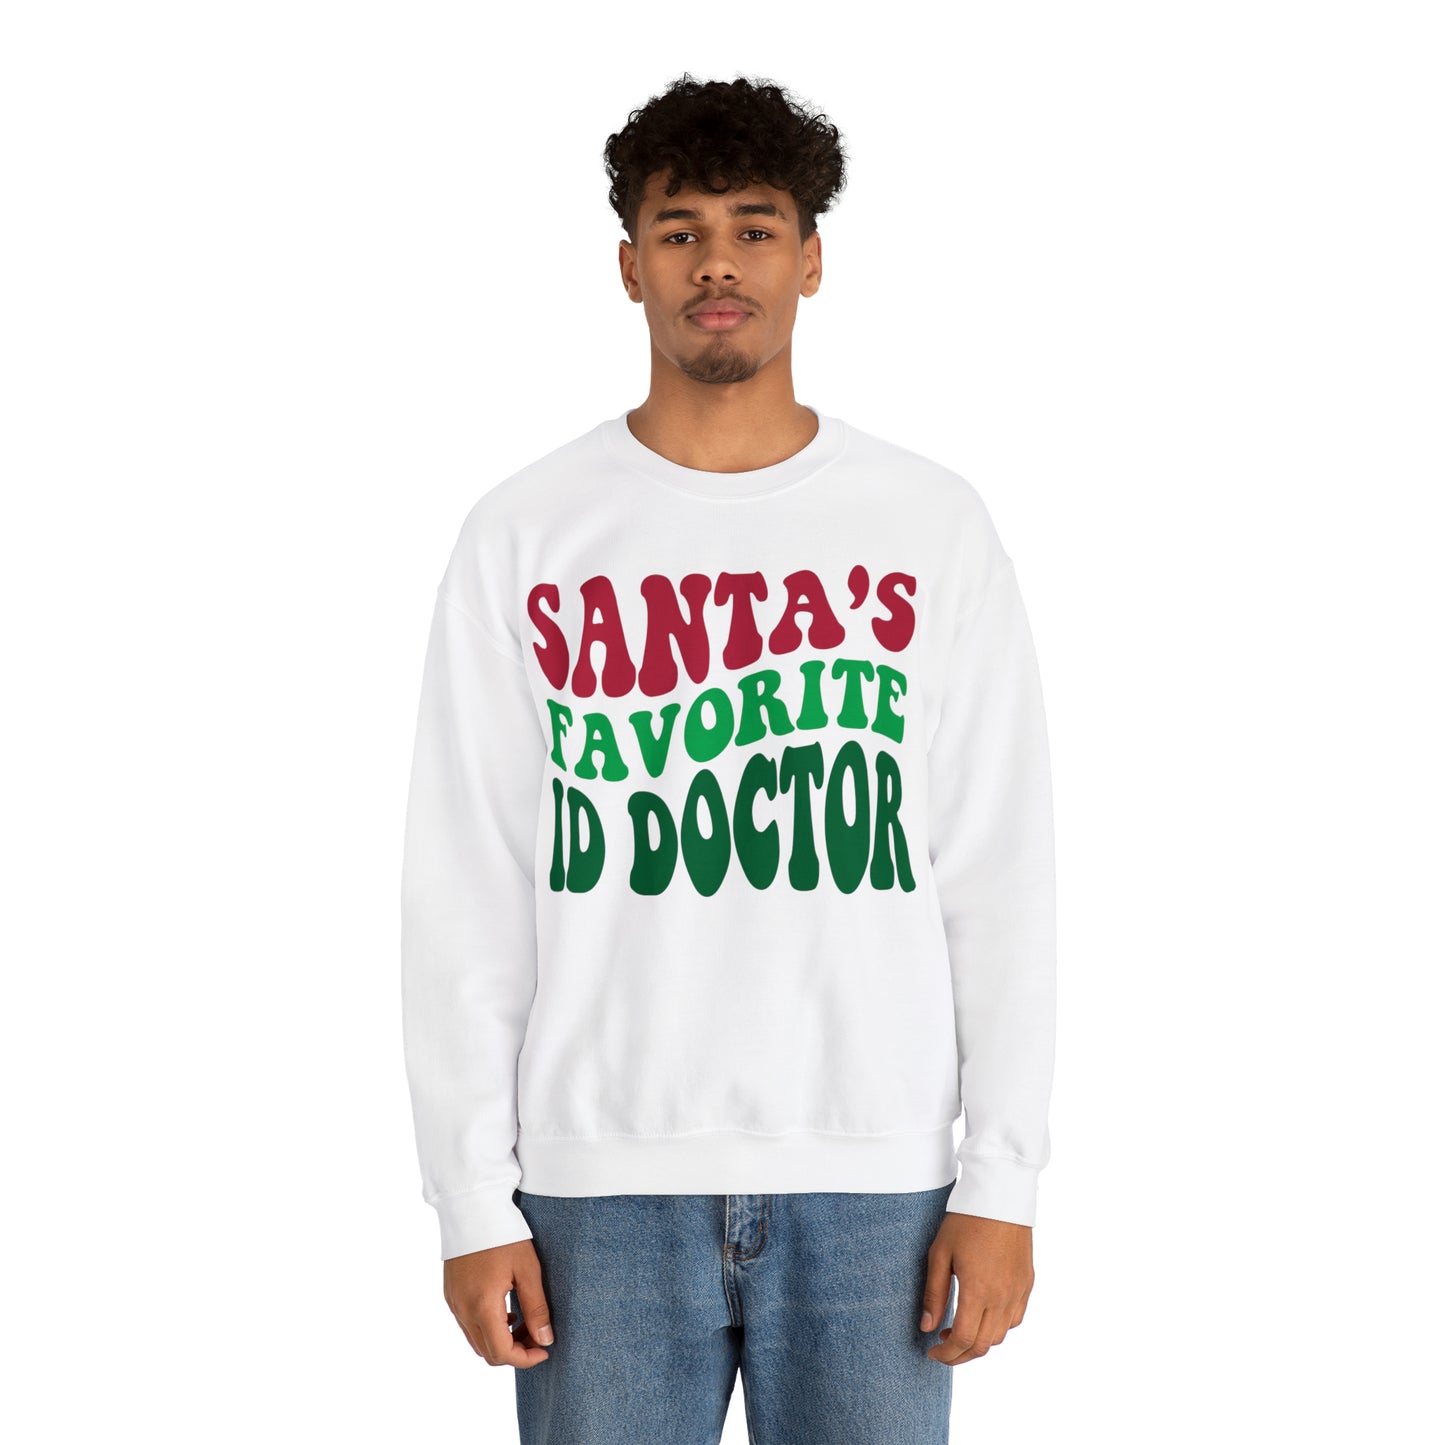 Santas Favorite ID Doctor, Infectious Disease Sweatshirt, Sweatshirt, Unisex Heavy Blend Sweater, Christmas gift, microbiologist